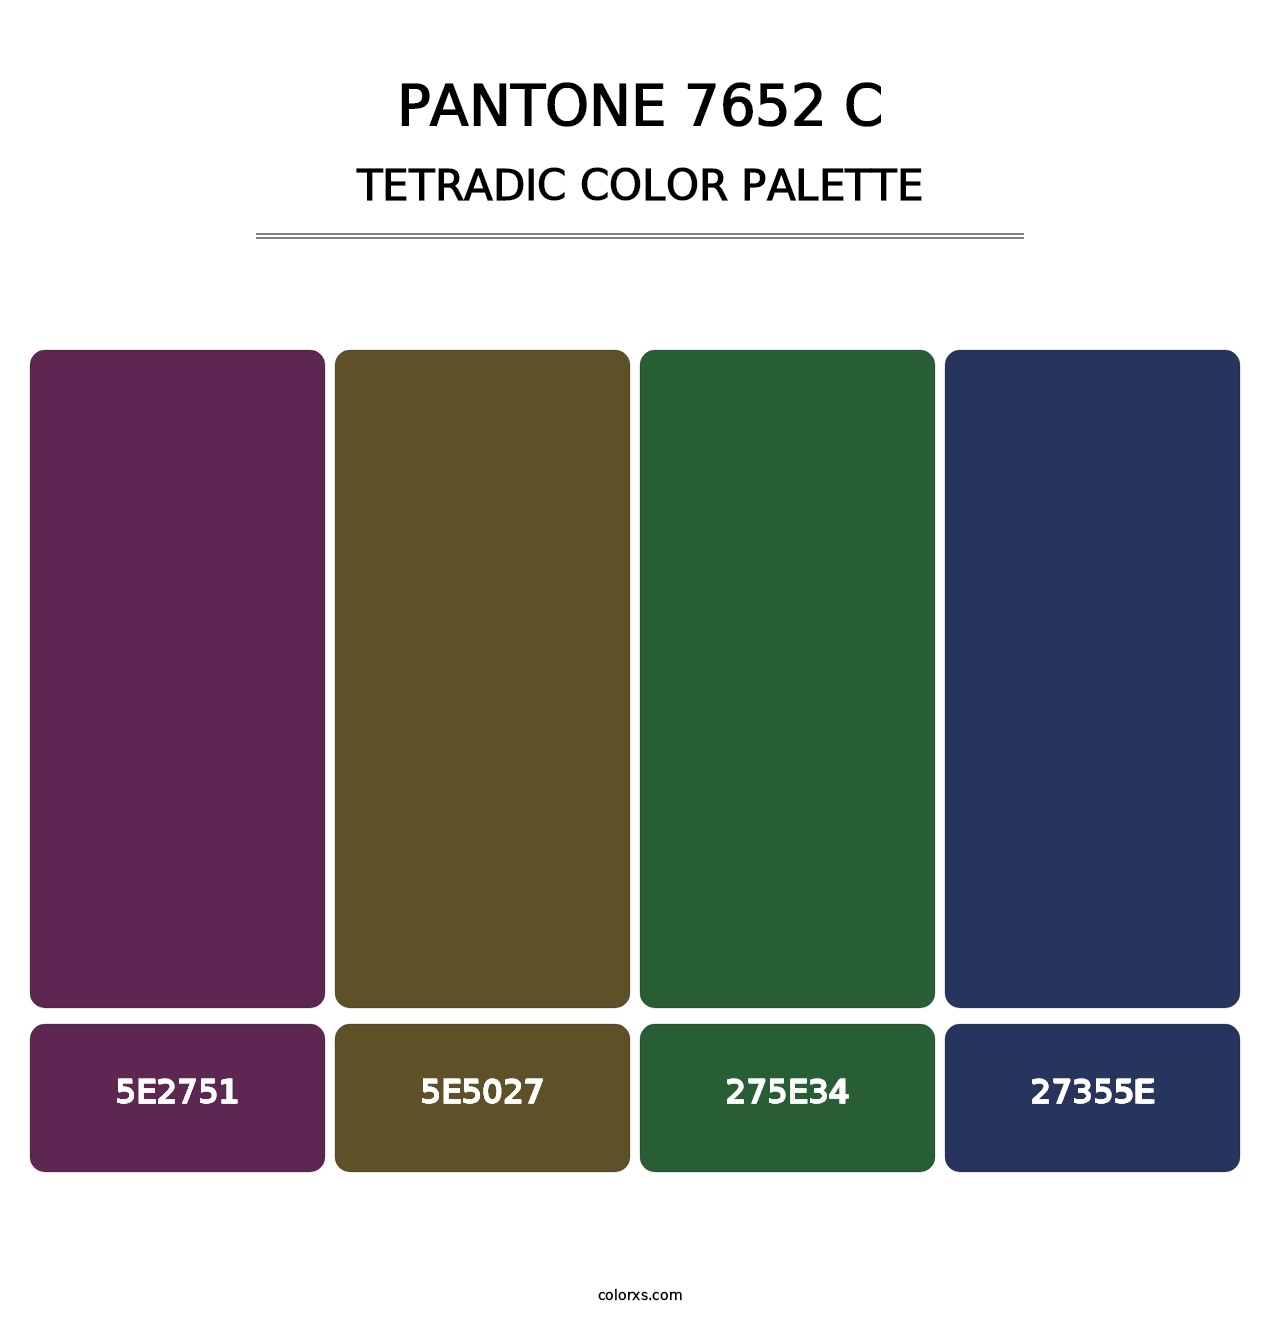 PANTONE 7652 C - Tetradic Color Palette